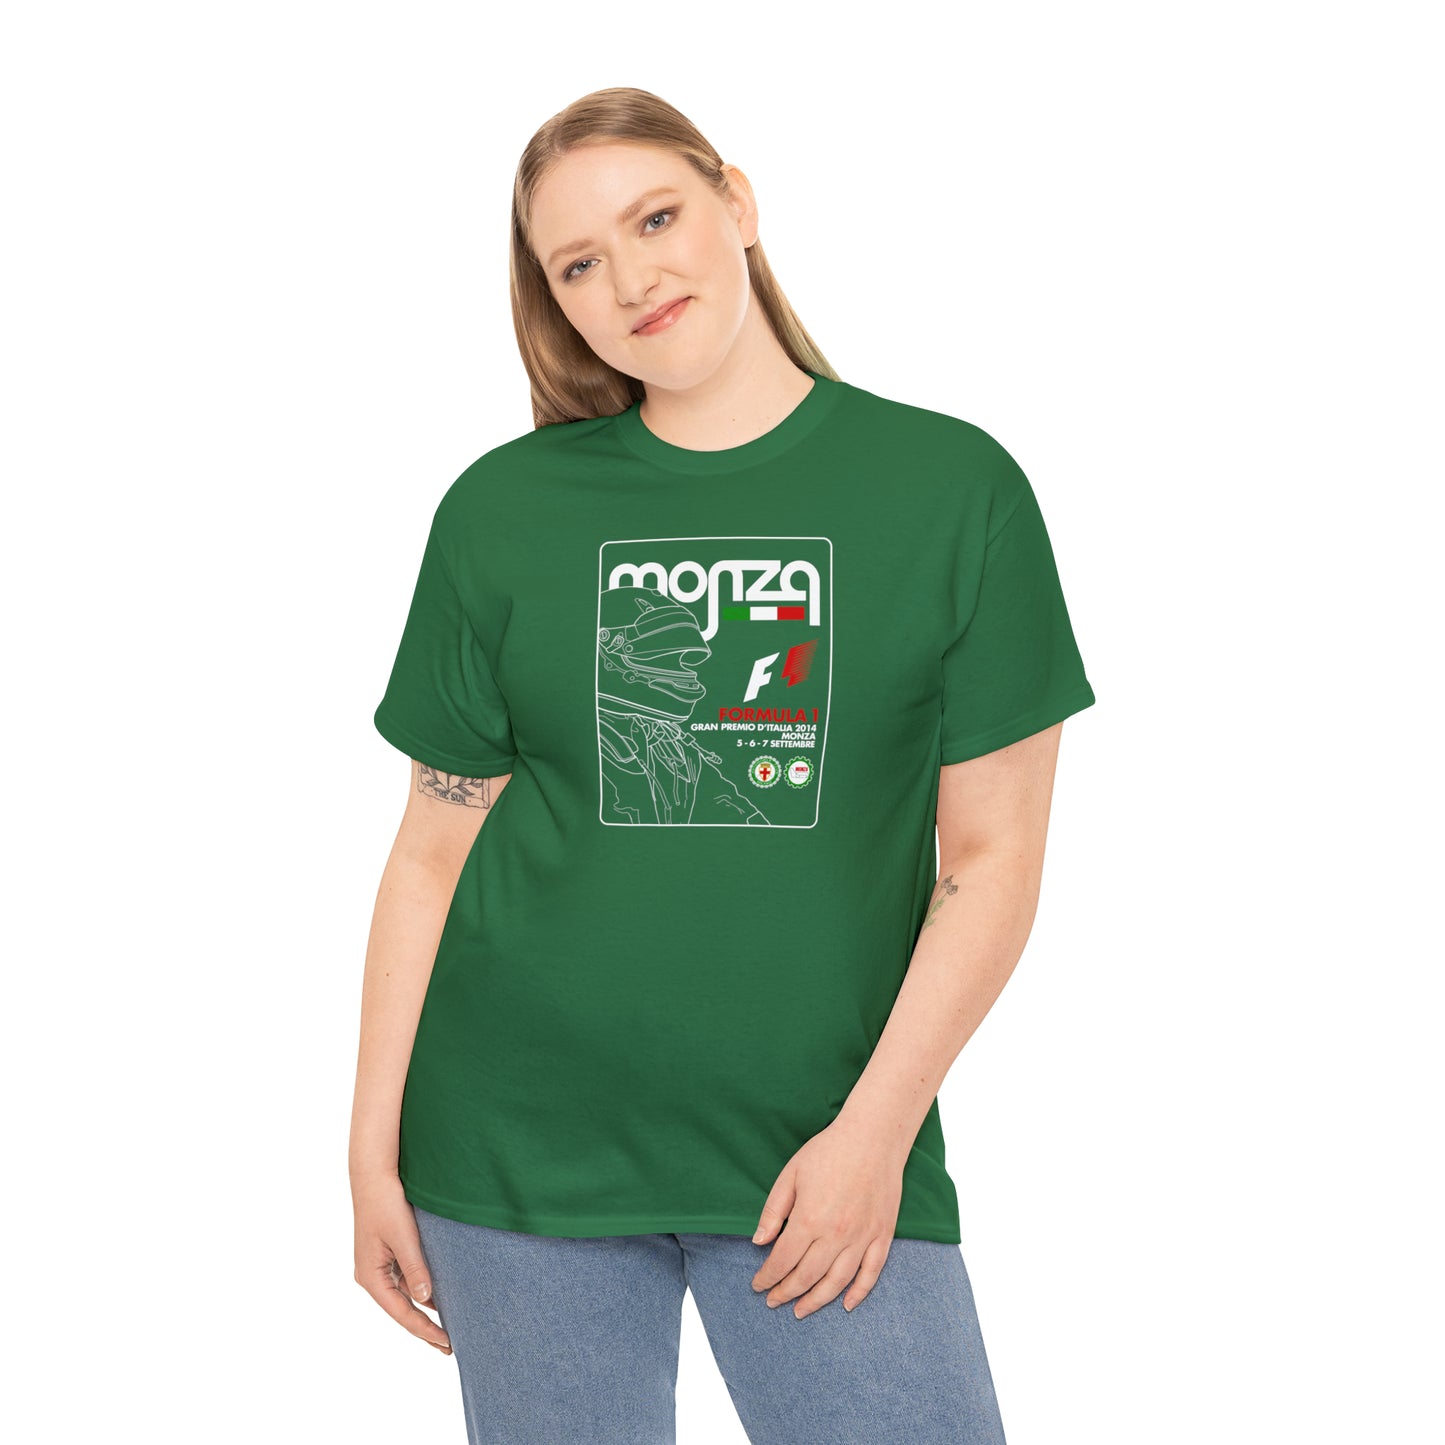 Grand Prix Monza T-Shirt